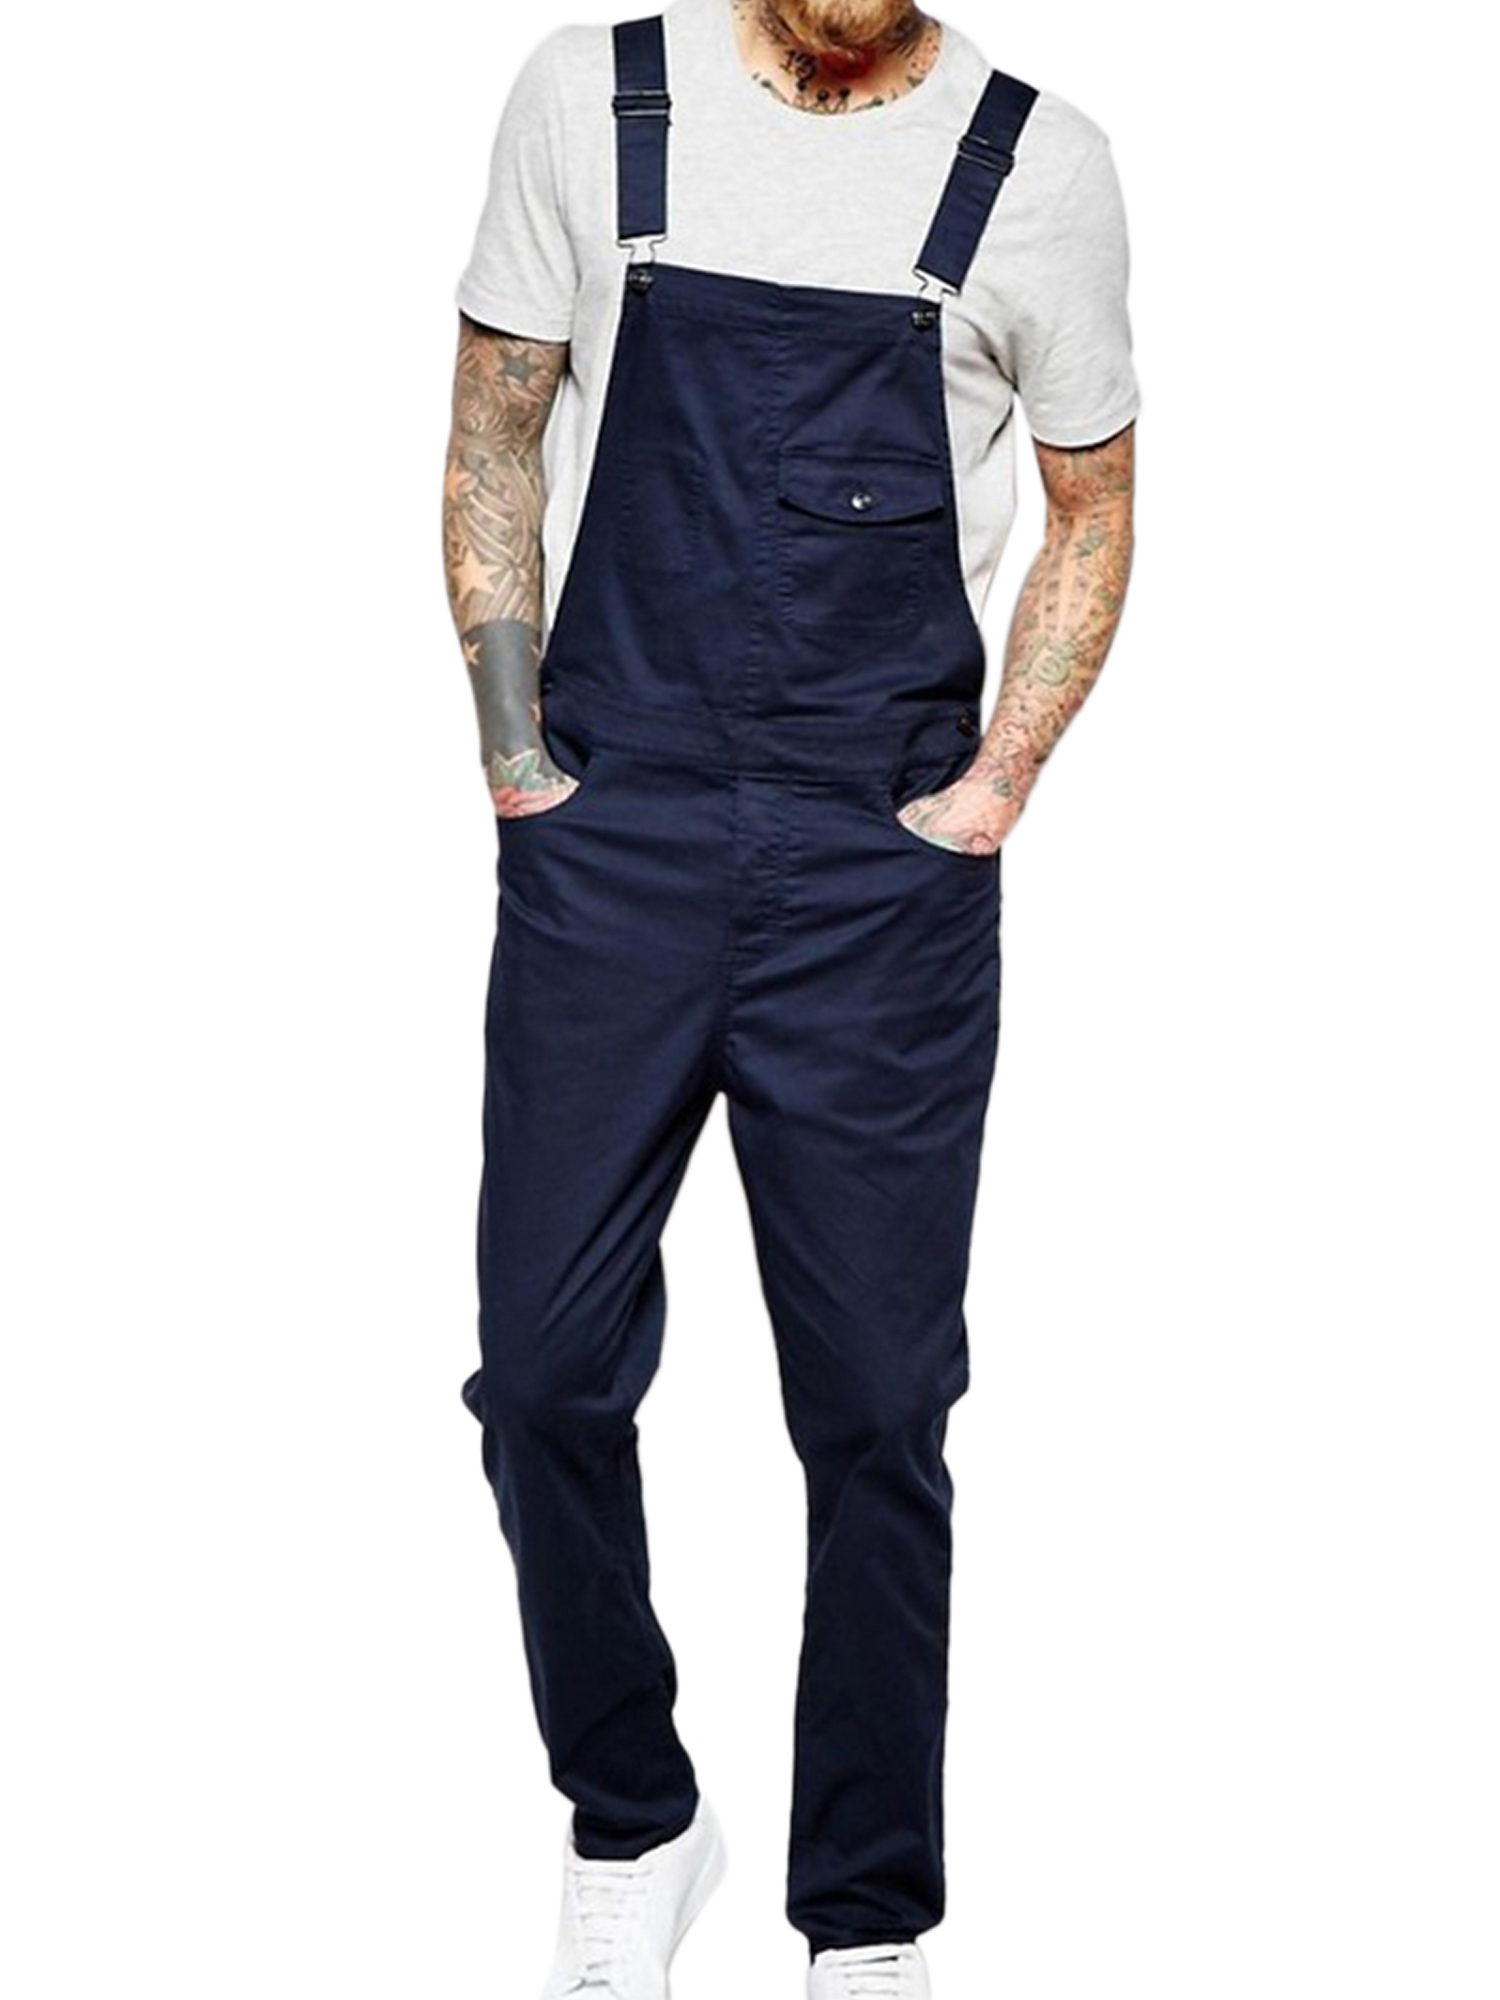 Bmnmsl Men Pants Bib Overalls Solid Color Jumpsuit Jeans Suspender Pants - image 1 of 5